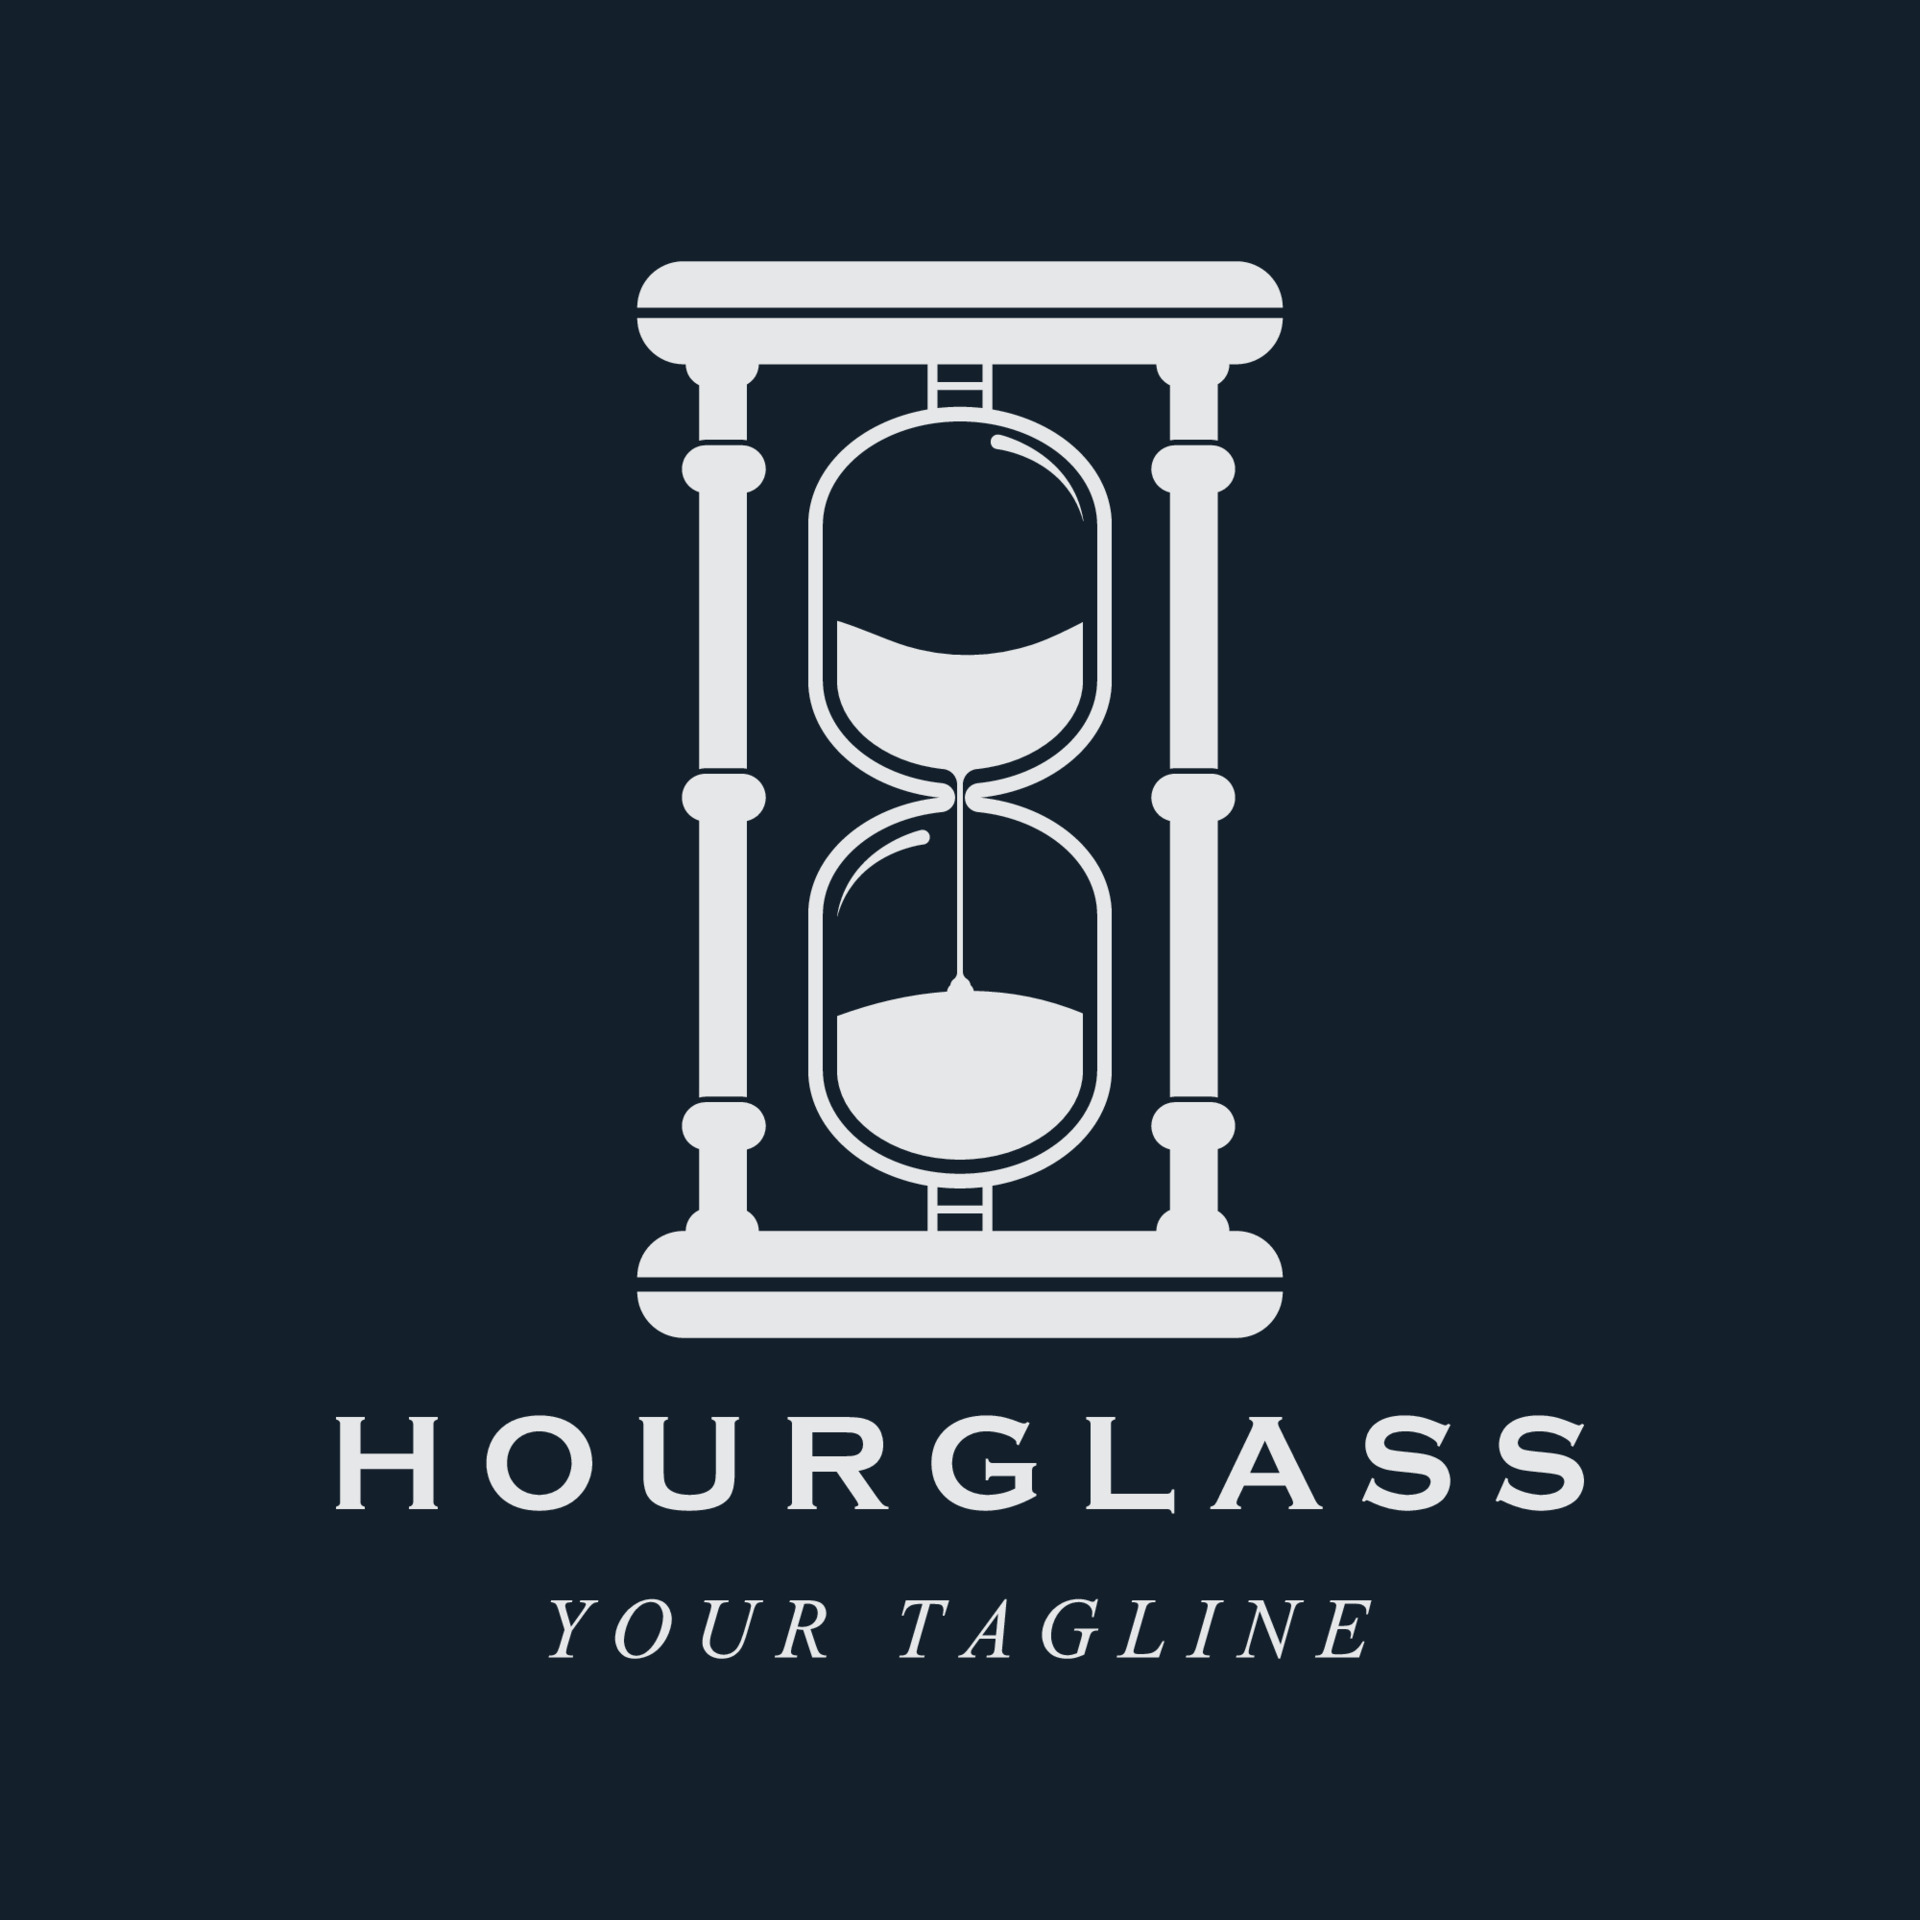 vintage hourglass logo vector with slogan template 12762710 Vector Art ...